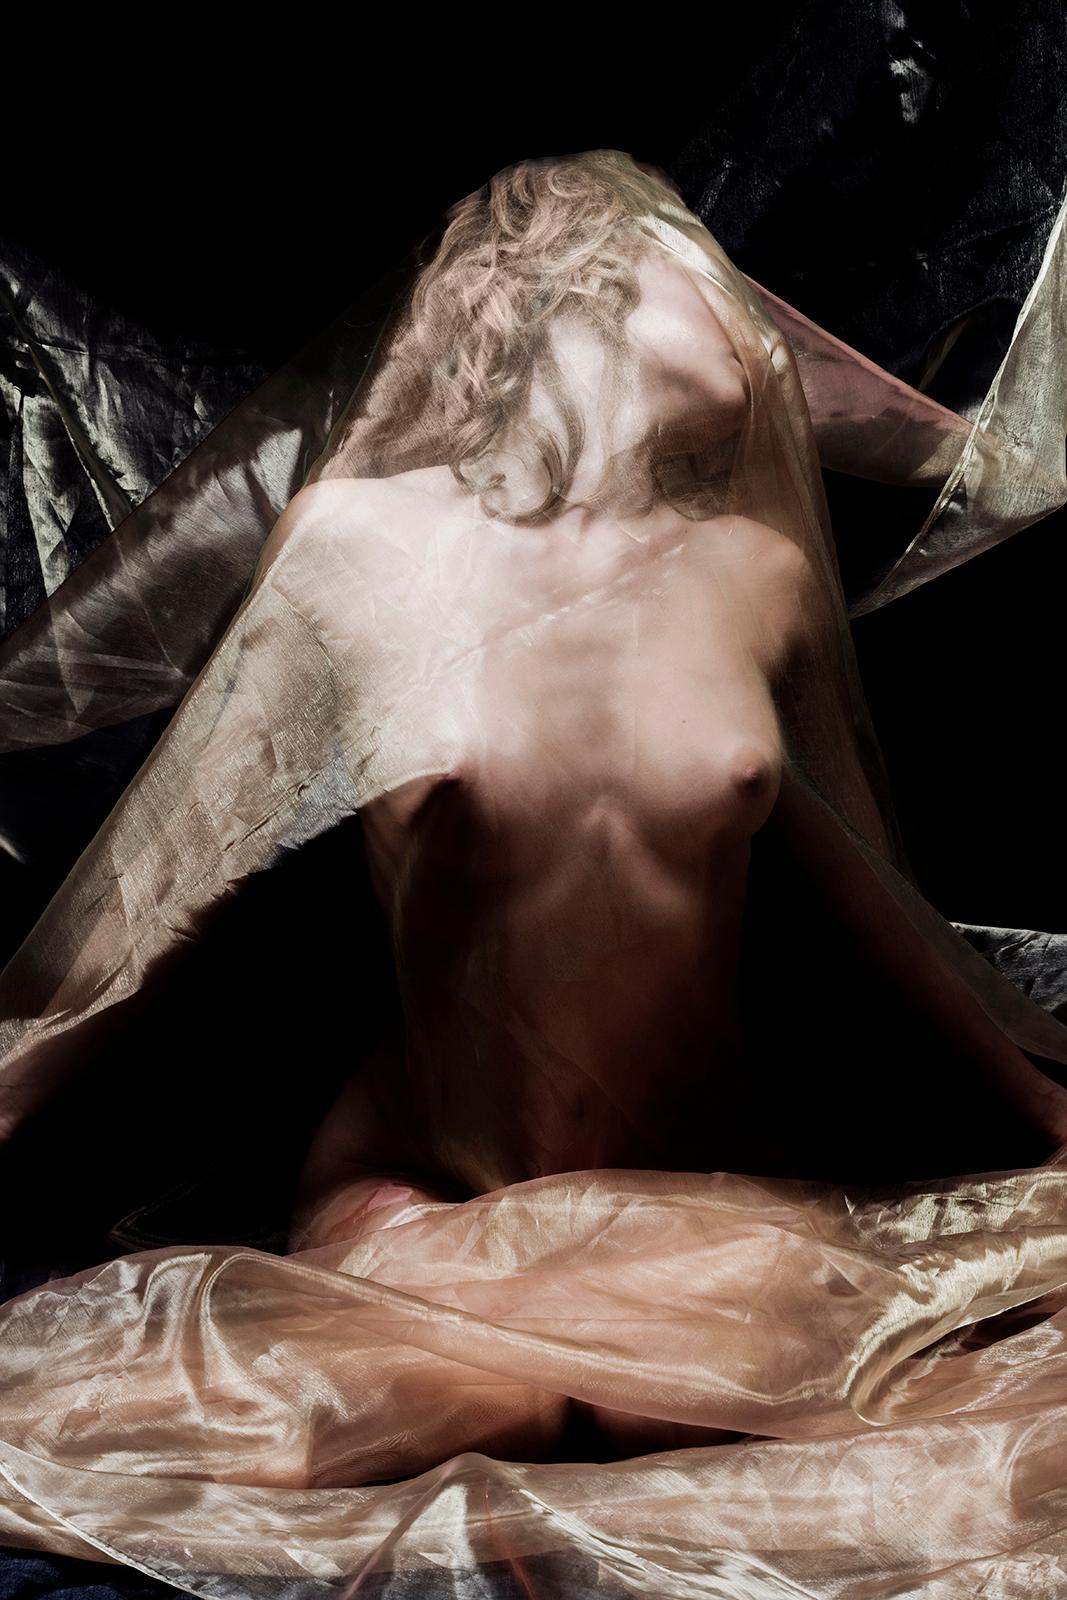 Ian Sanderson Nude Photograph - Organza dream - Signed limited edition sensual fine art print, Model semi naked